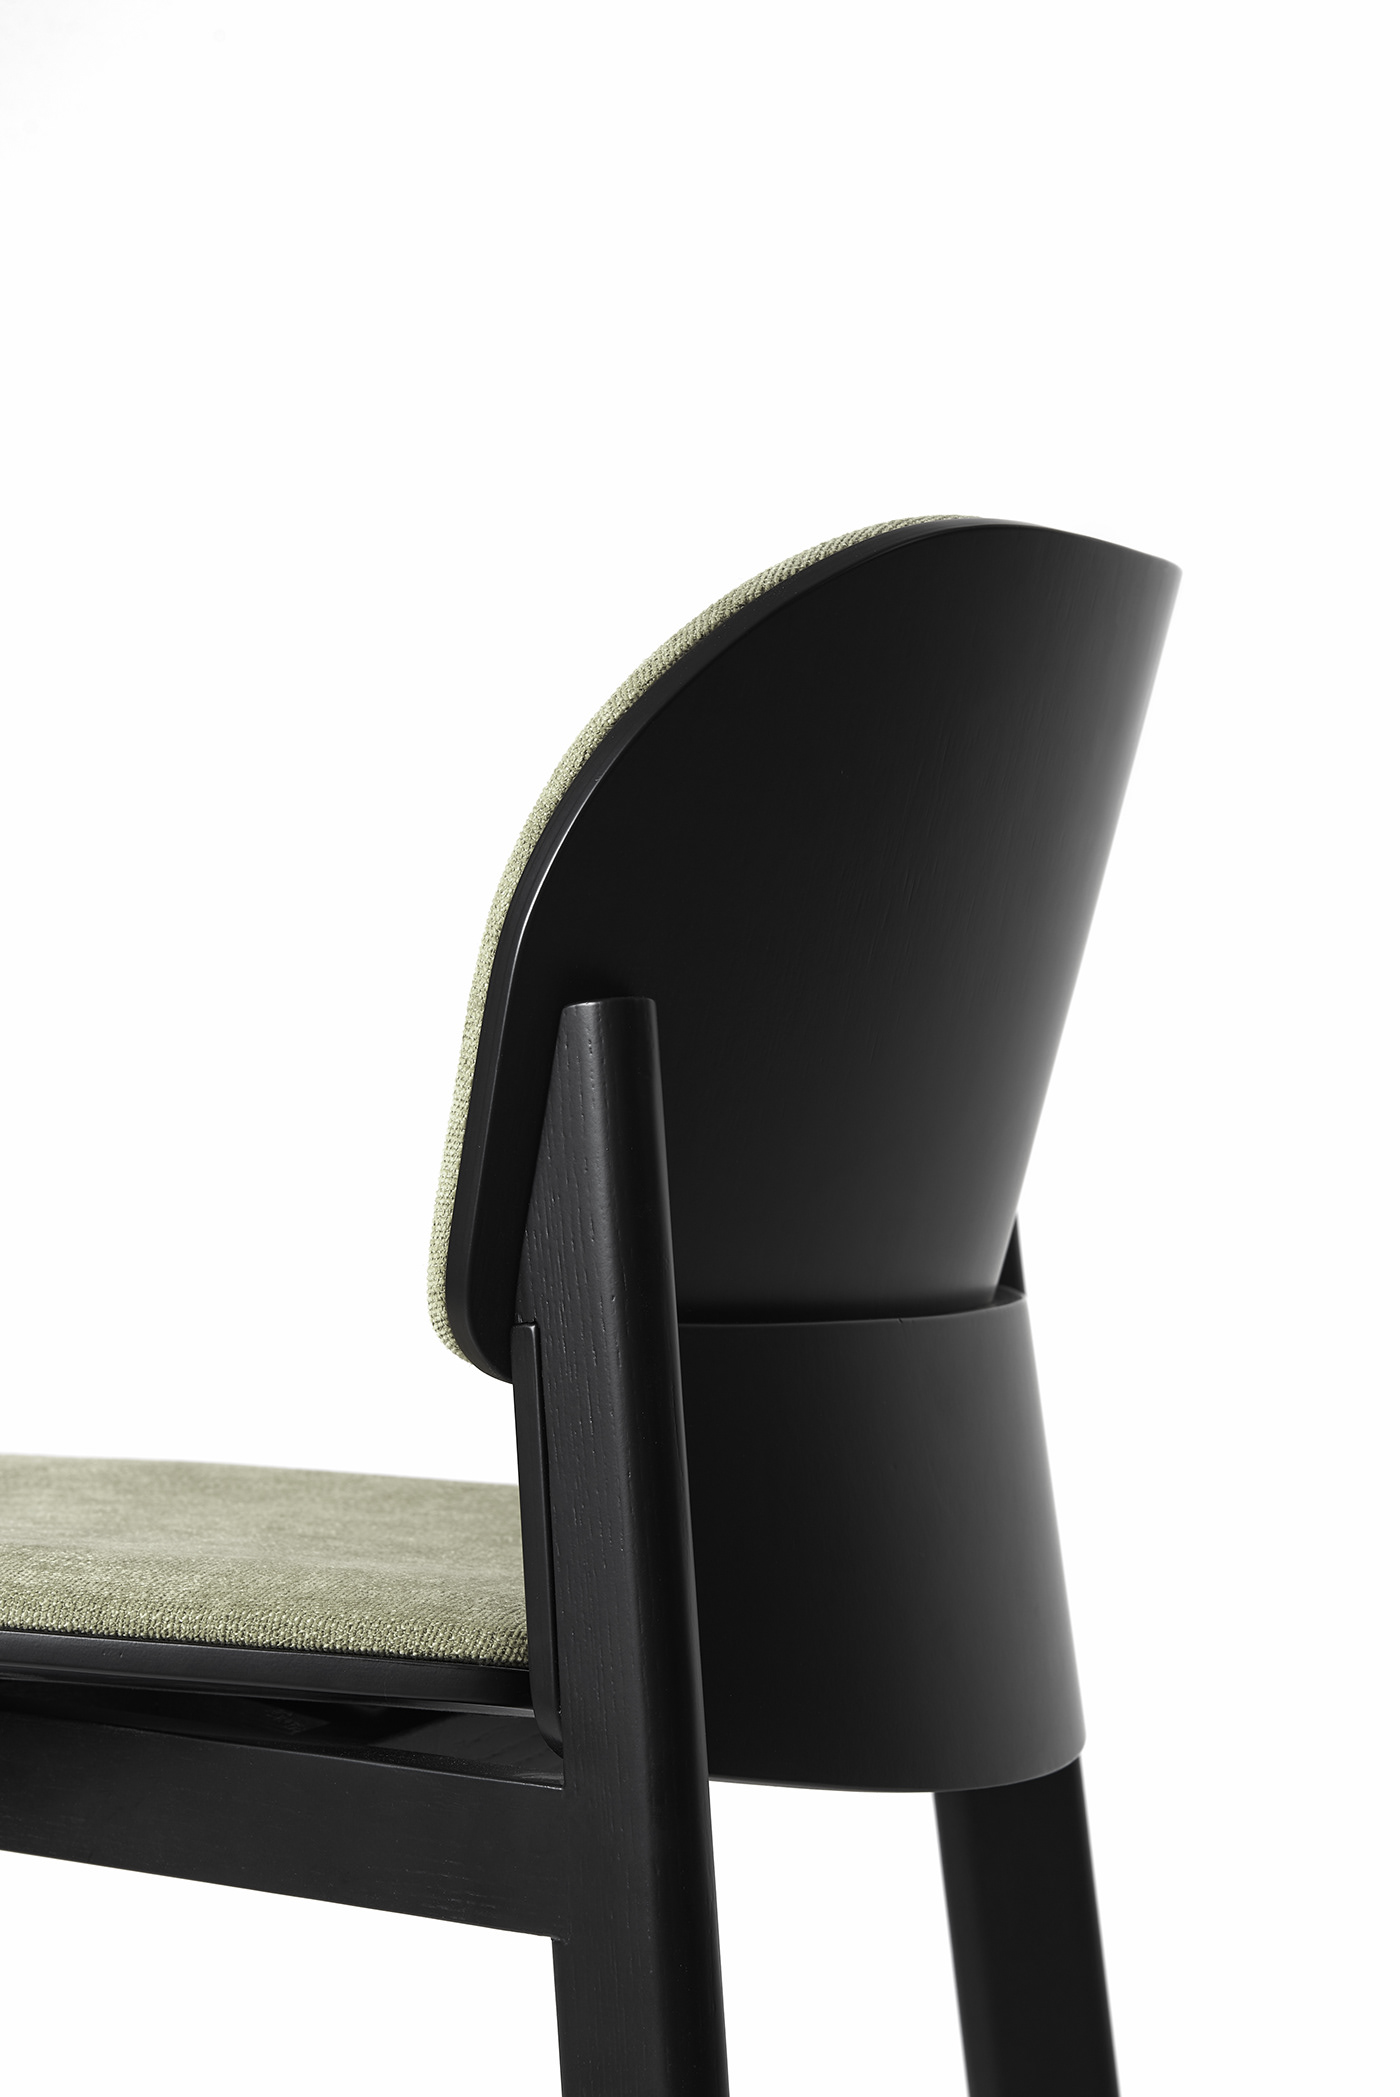 chair chairdesign productdesign svoya svoyastudio Woo woofurniture